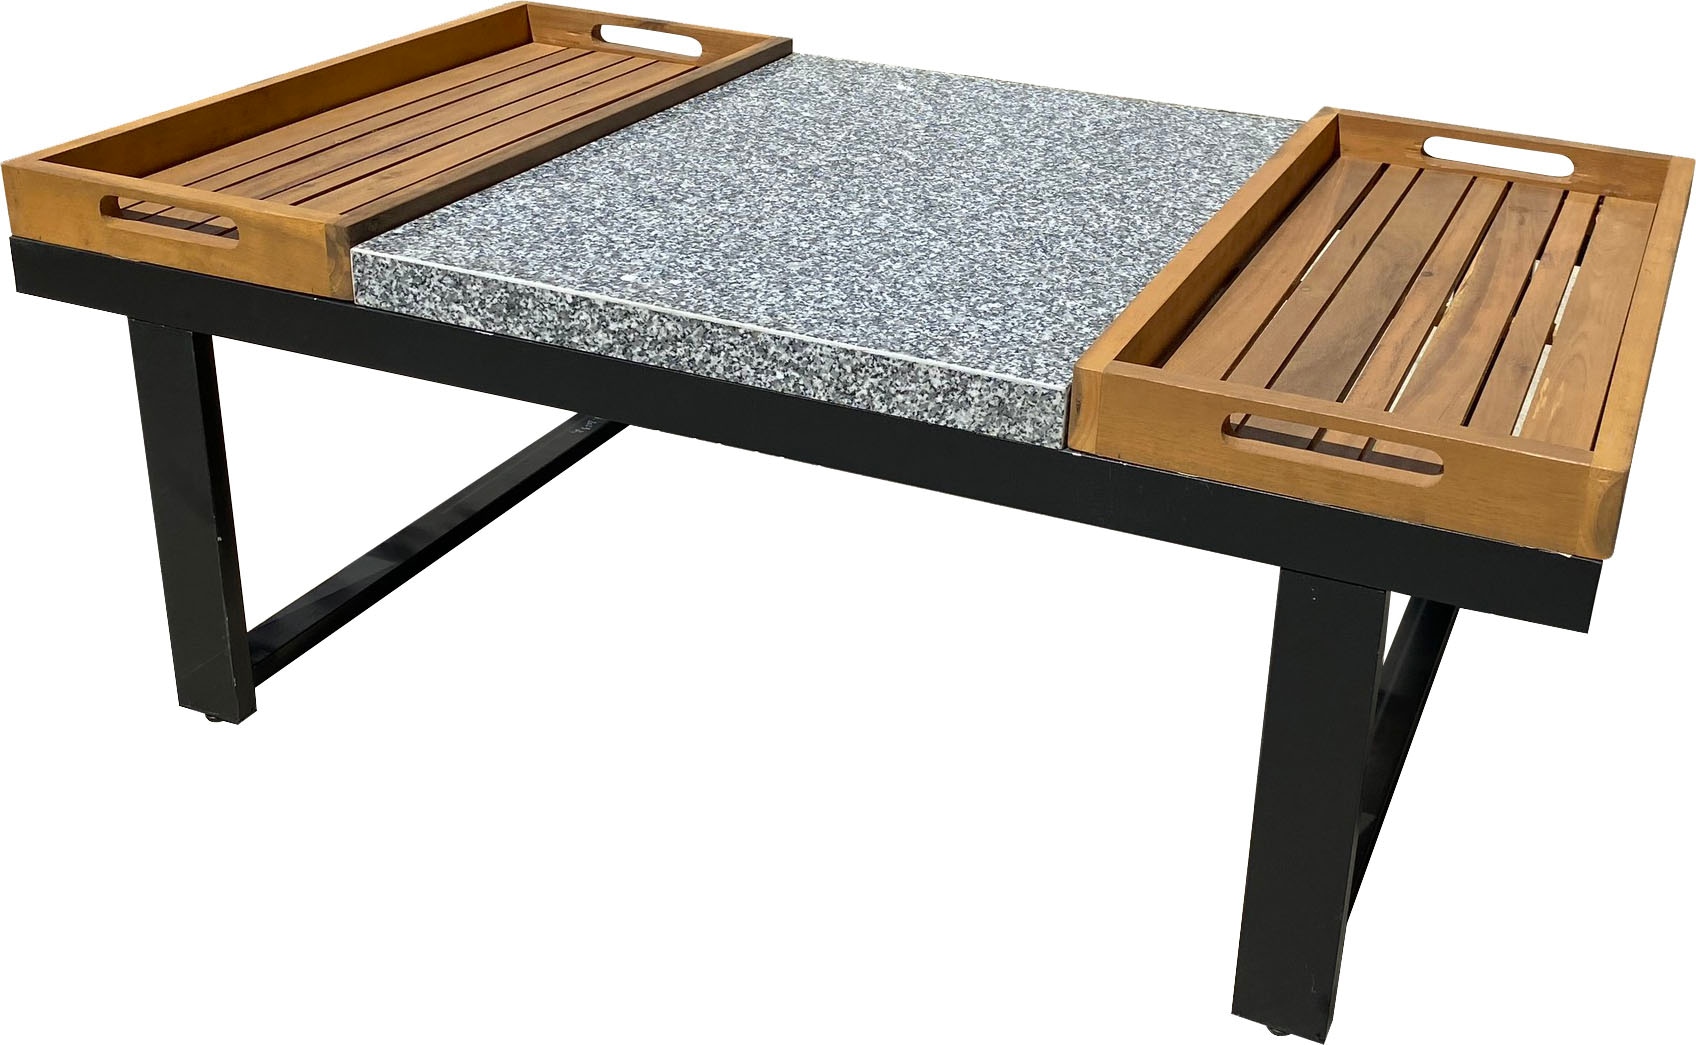 Garden Pleasure Gartenlounge-Set », Lounge-Gruppe »MERIDA««, 1 Ecklounge, Tisch LxB: 110x65 cm